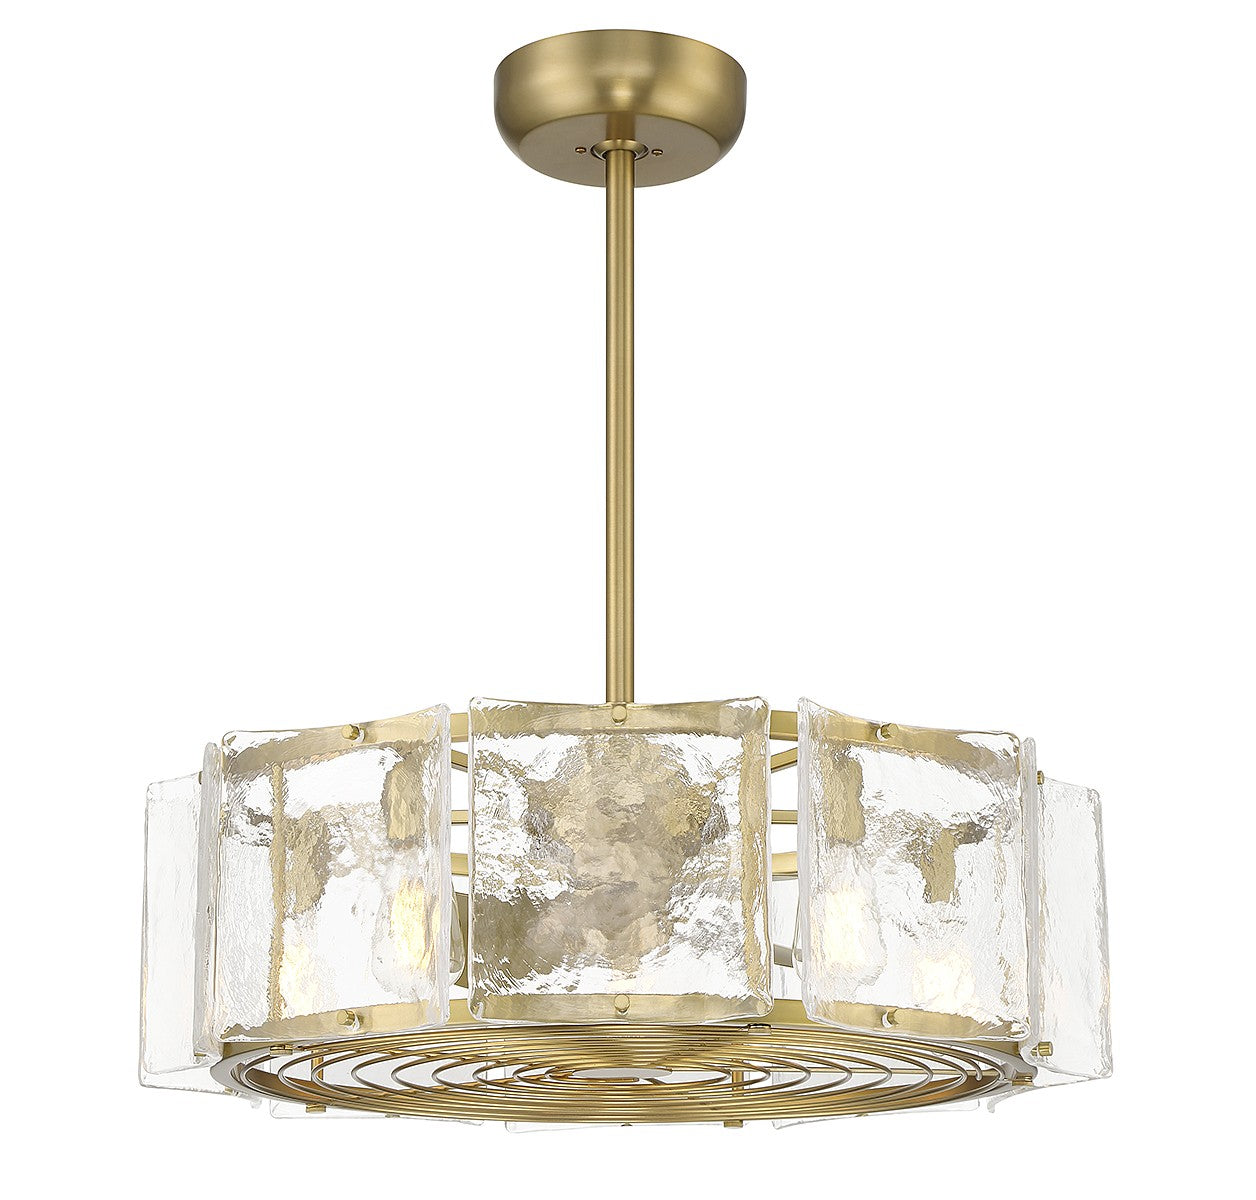 Savoy House Genry 27-FD-8201-322 Ceiling Fan 14 - Warm Brass, Gold/